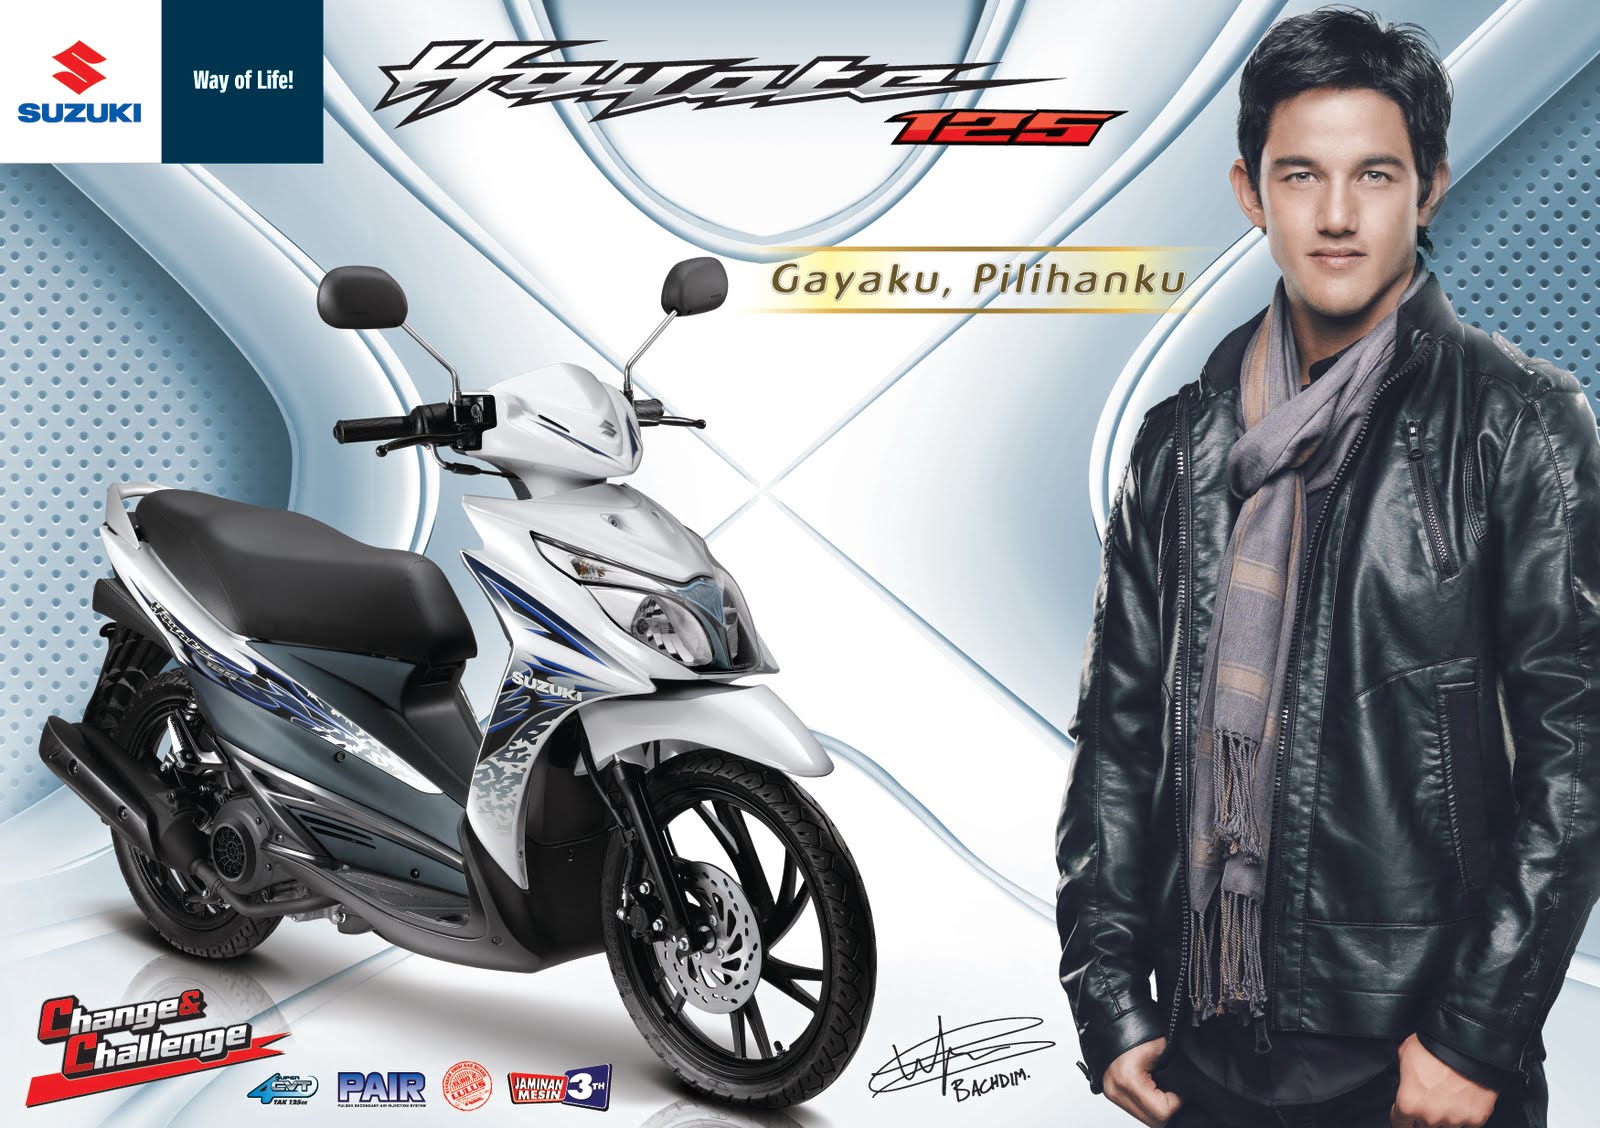 Comparison Of Motorcycle Features Suzuki Hayate 125 Vs Honda